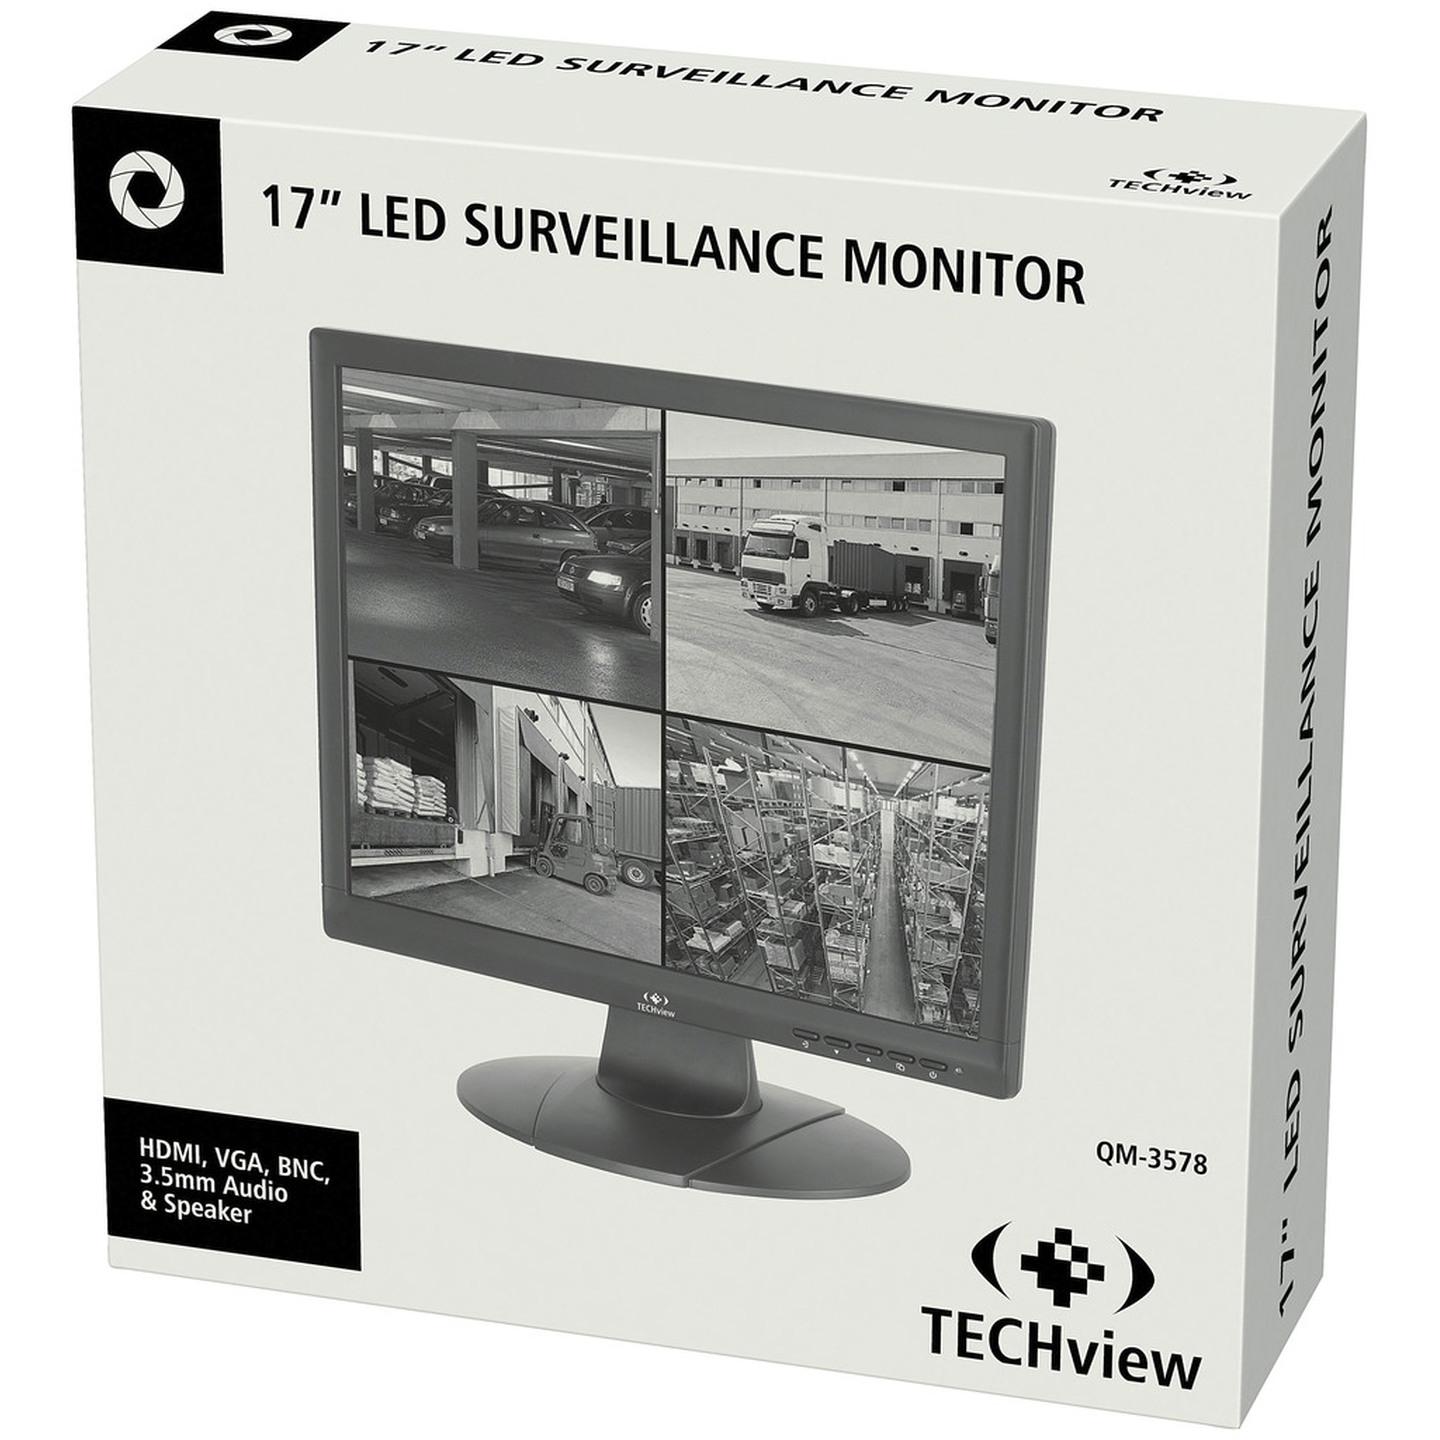 17 LED Surveillance Monitor